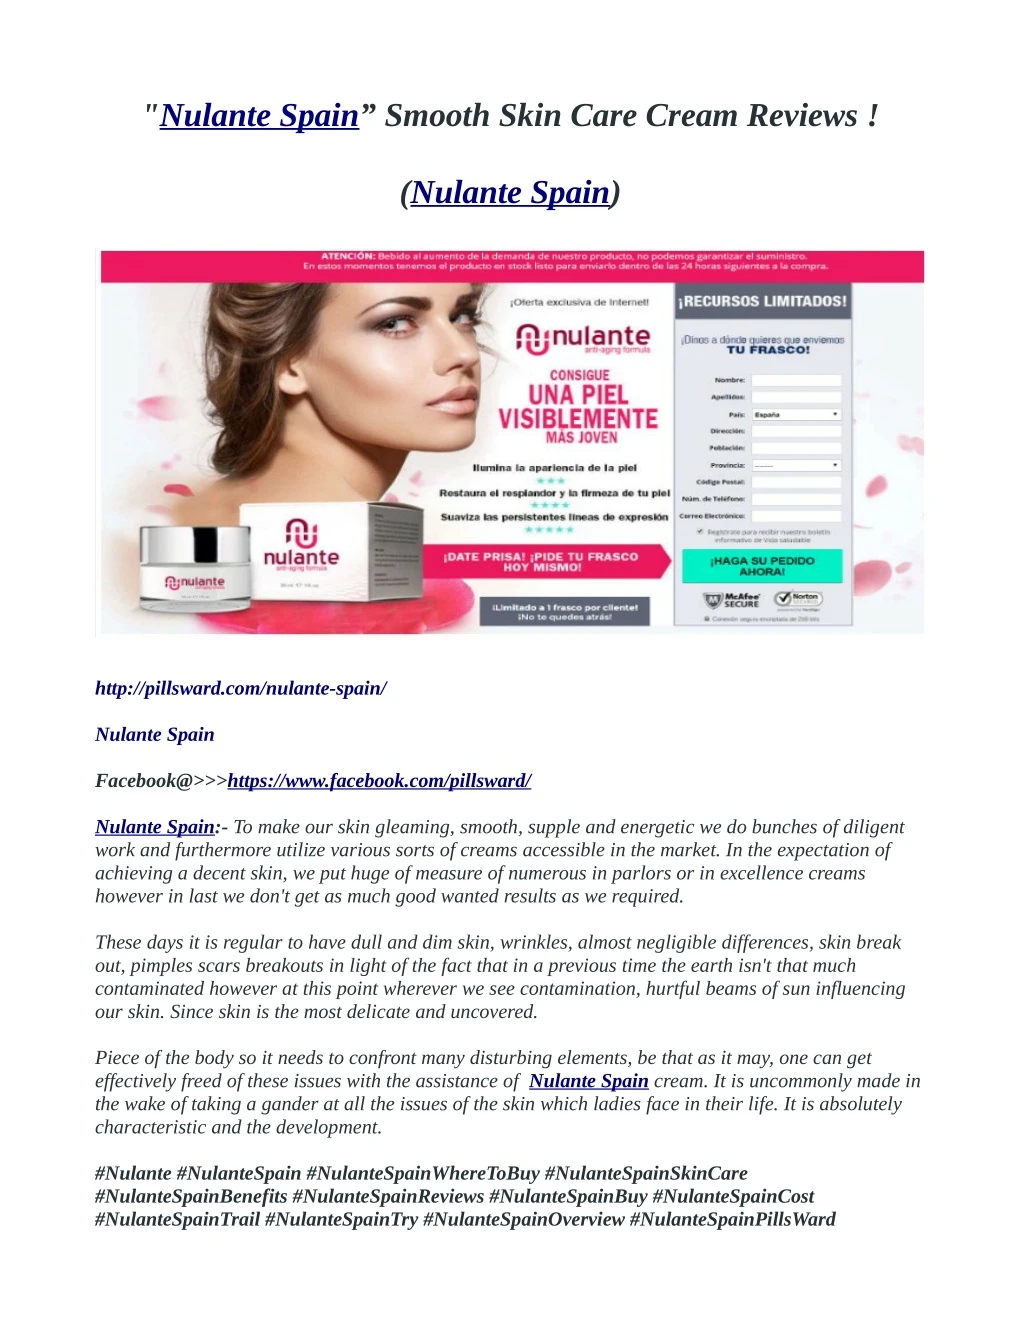 nulante spain smooth skin care cream reviews